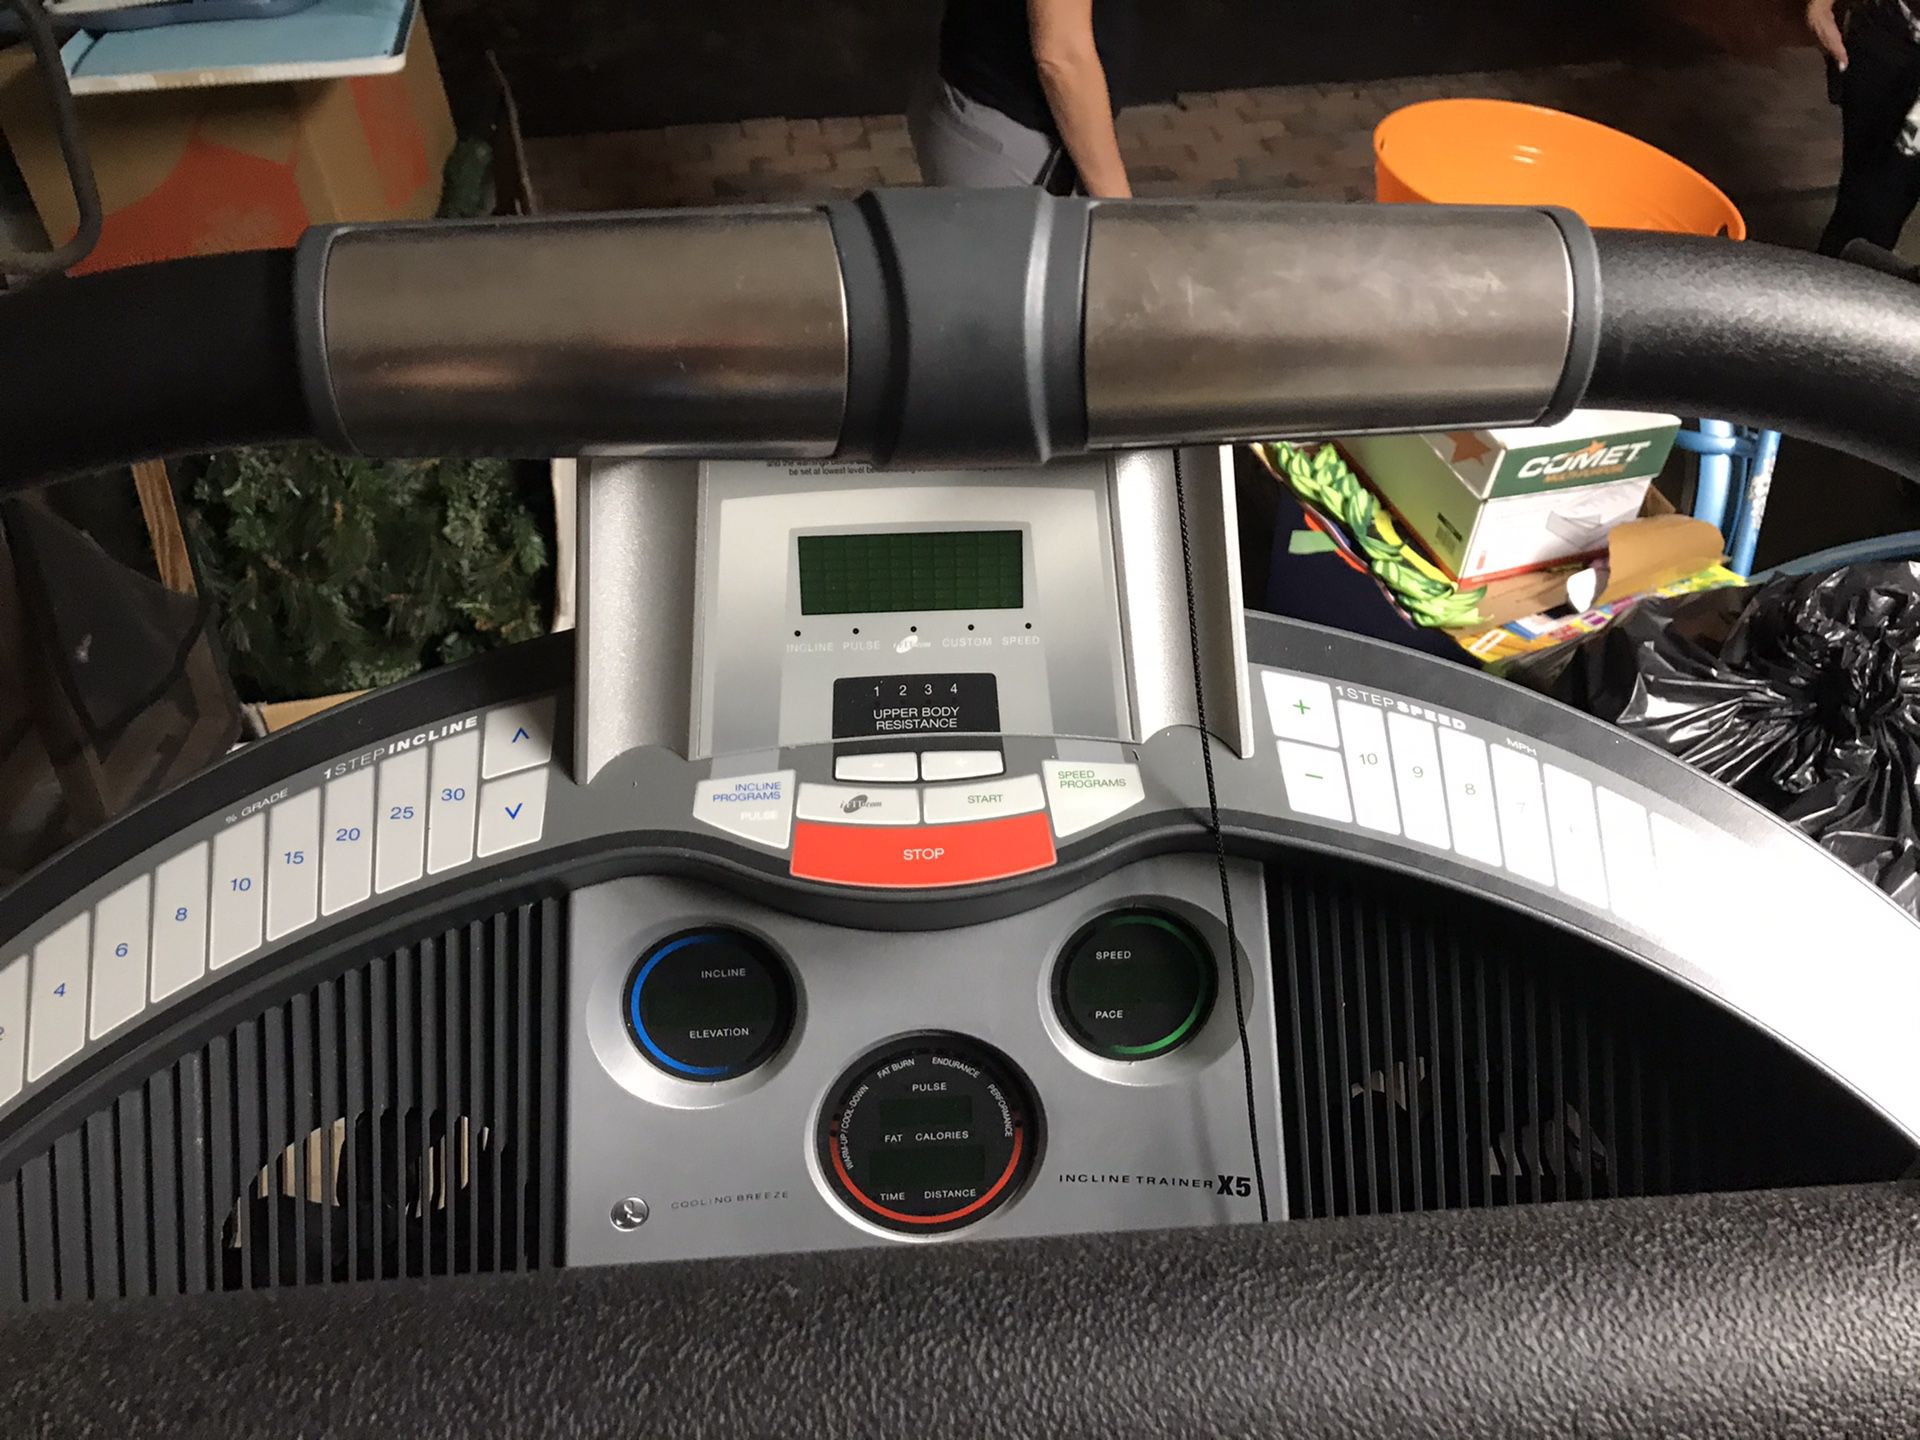 Treadmill, NordicTrack Incline Trainer X5